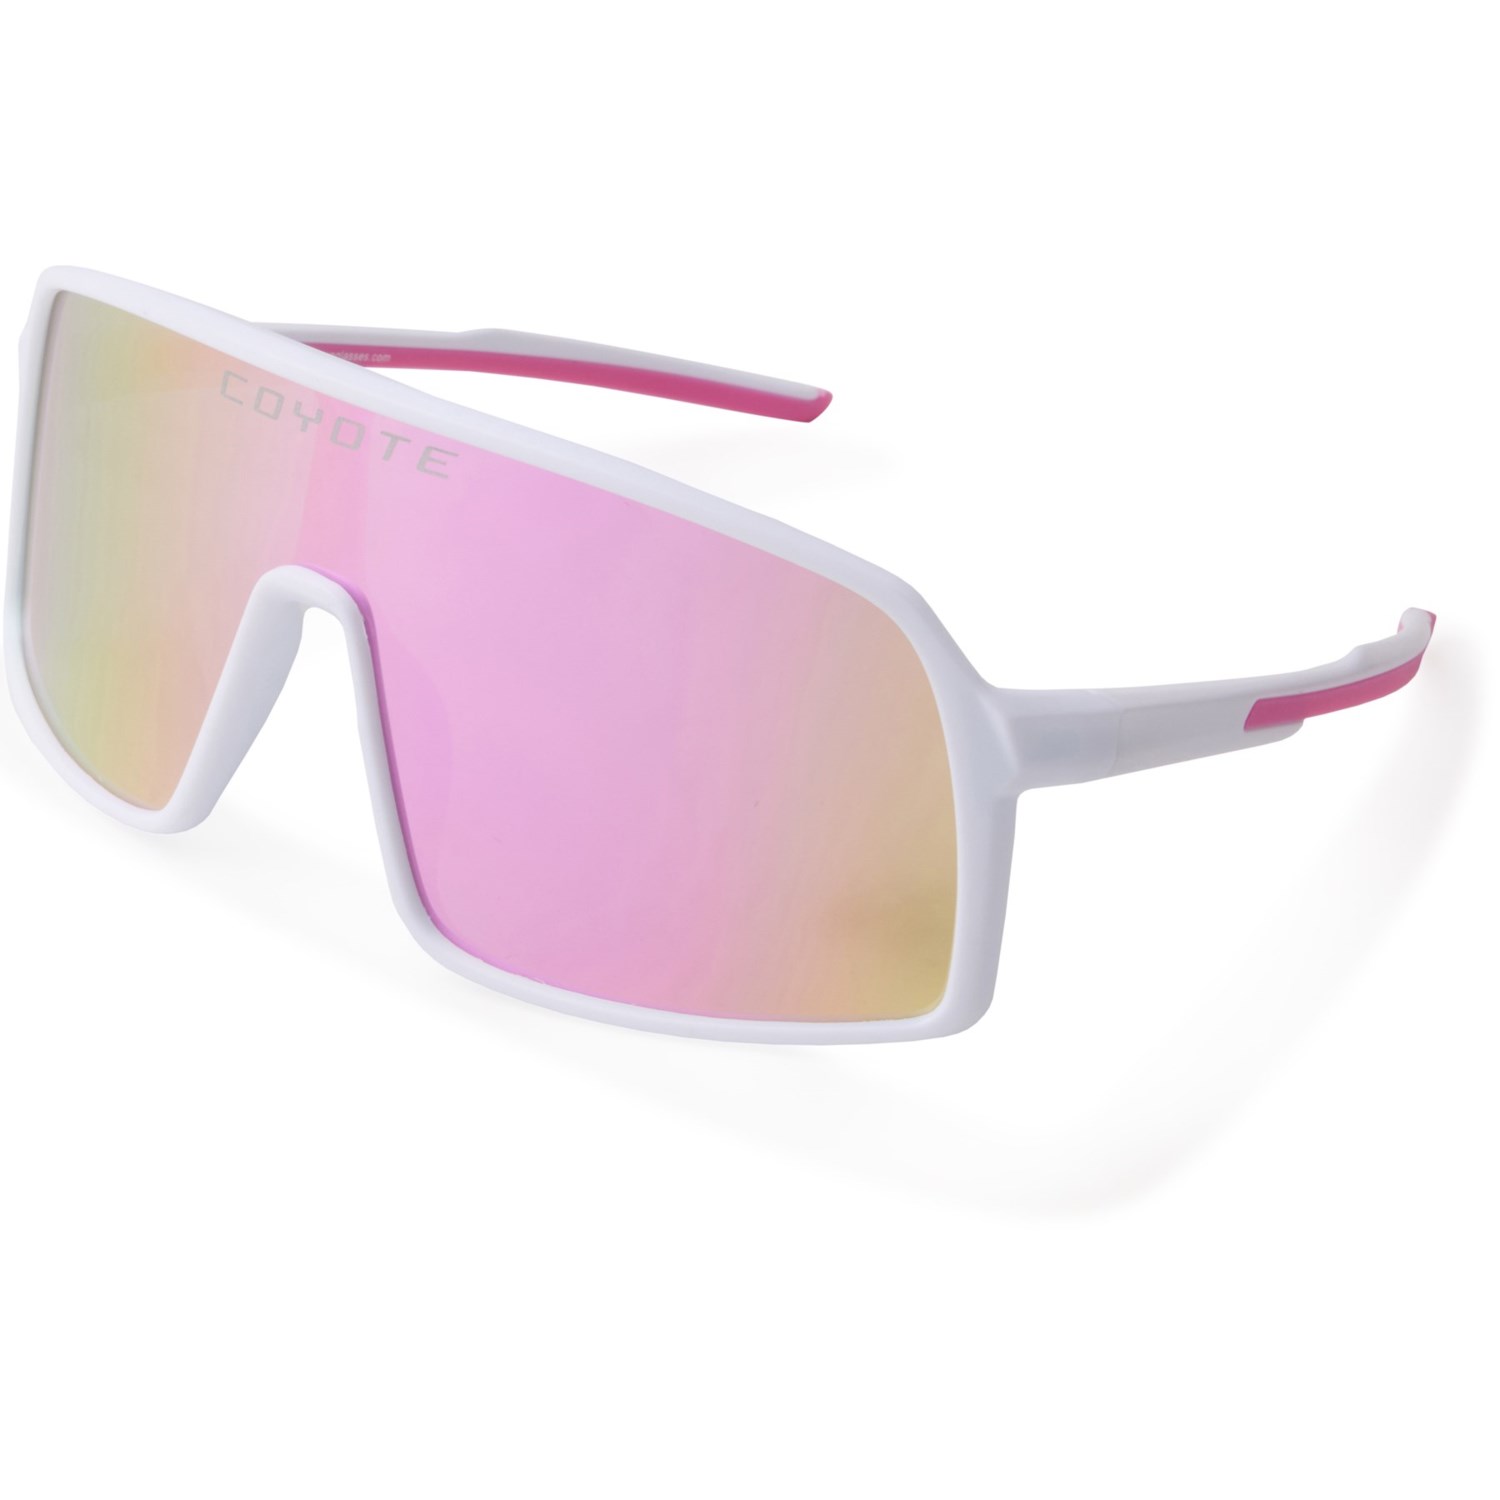 Coyote Vision USA Mamba Single Lens Polarized Sunglasses, Pink